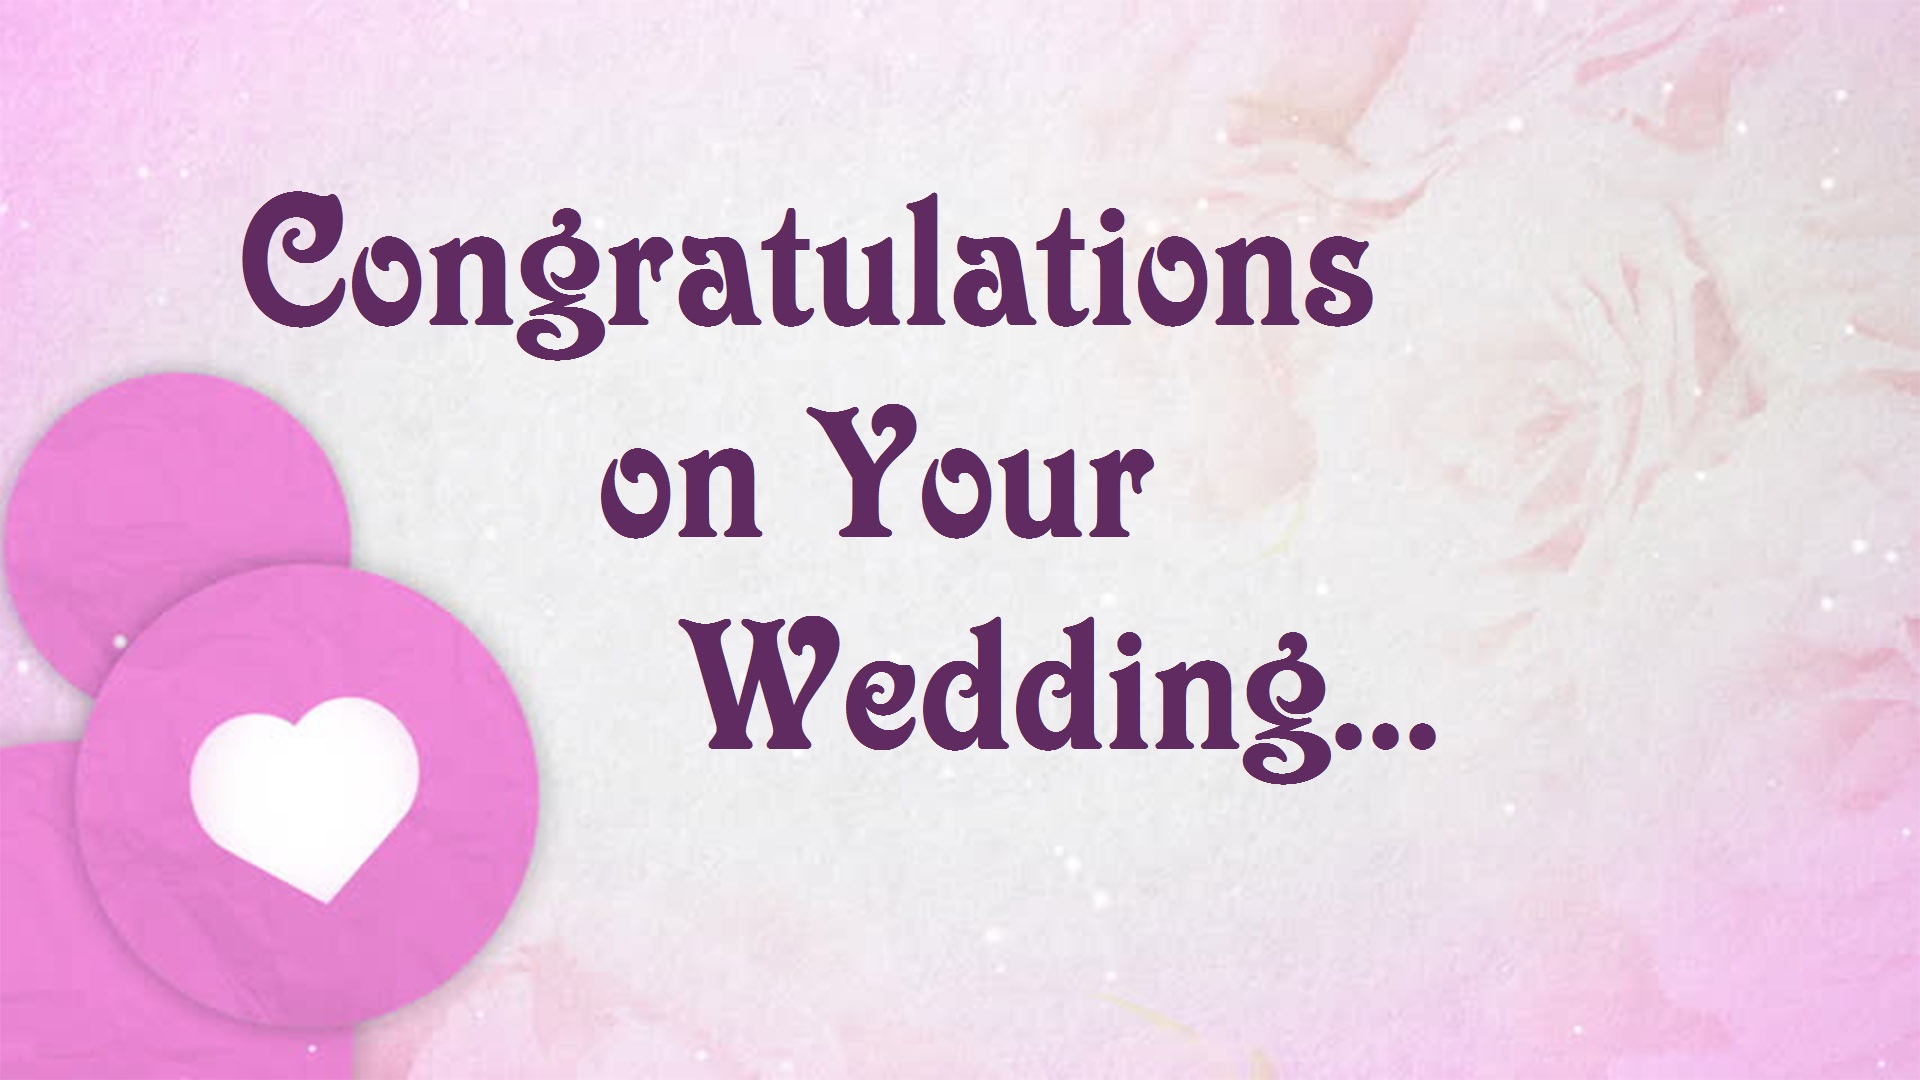 image for wedding congratulations